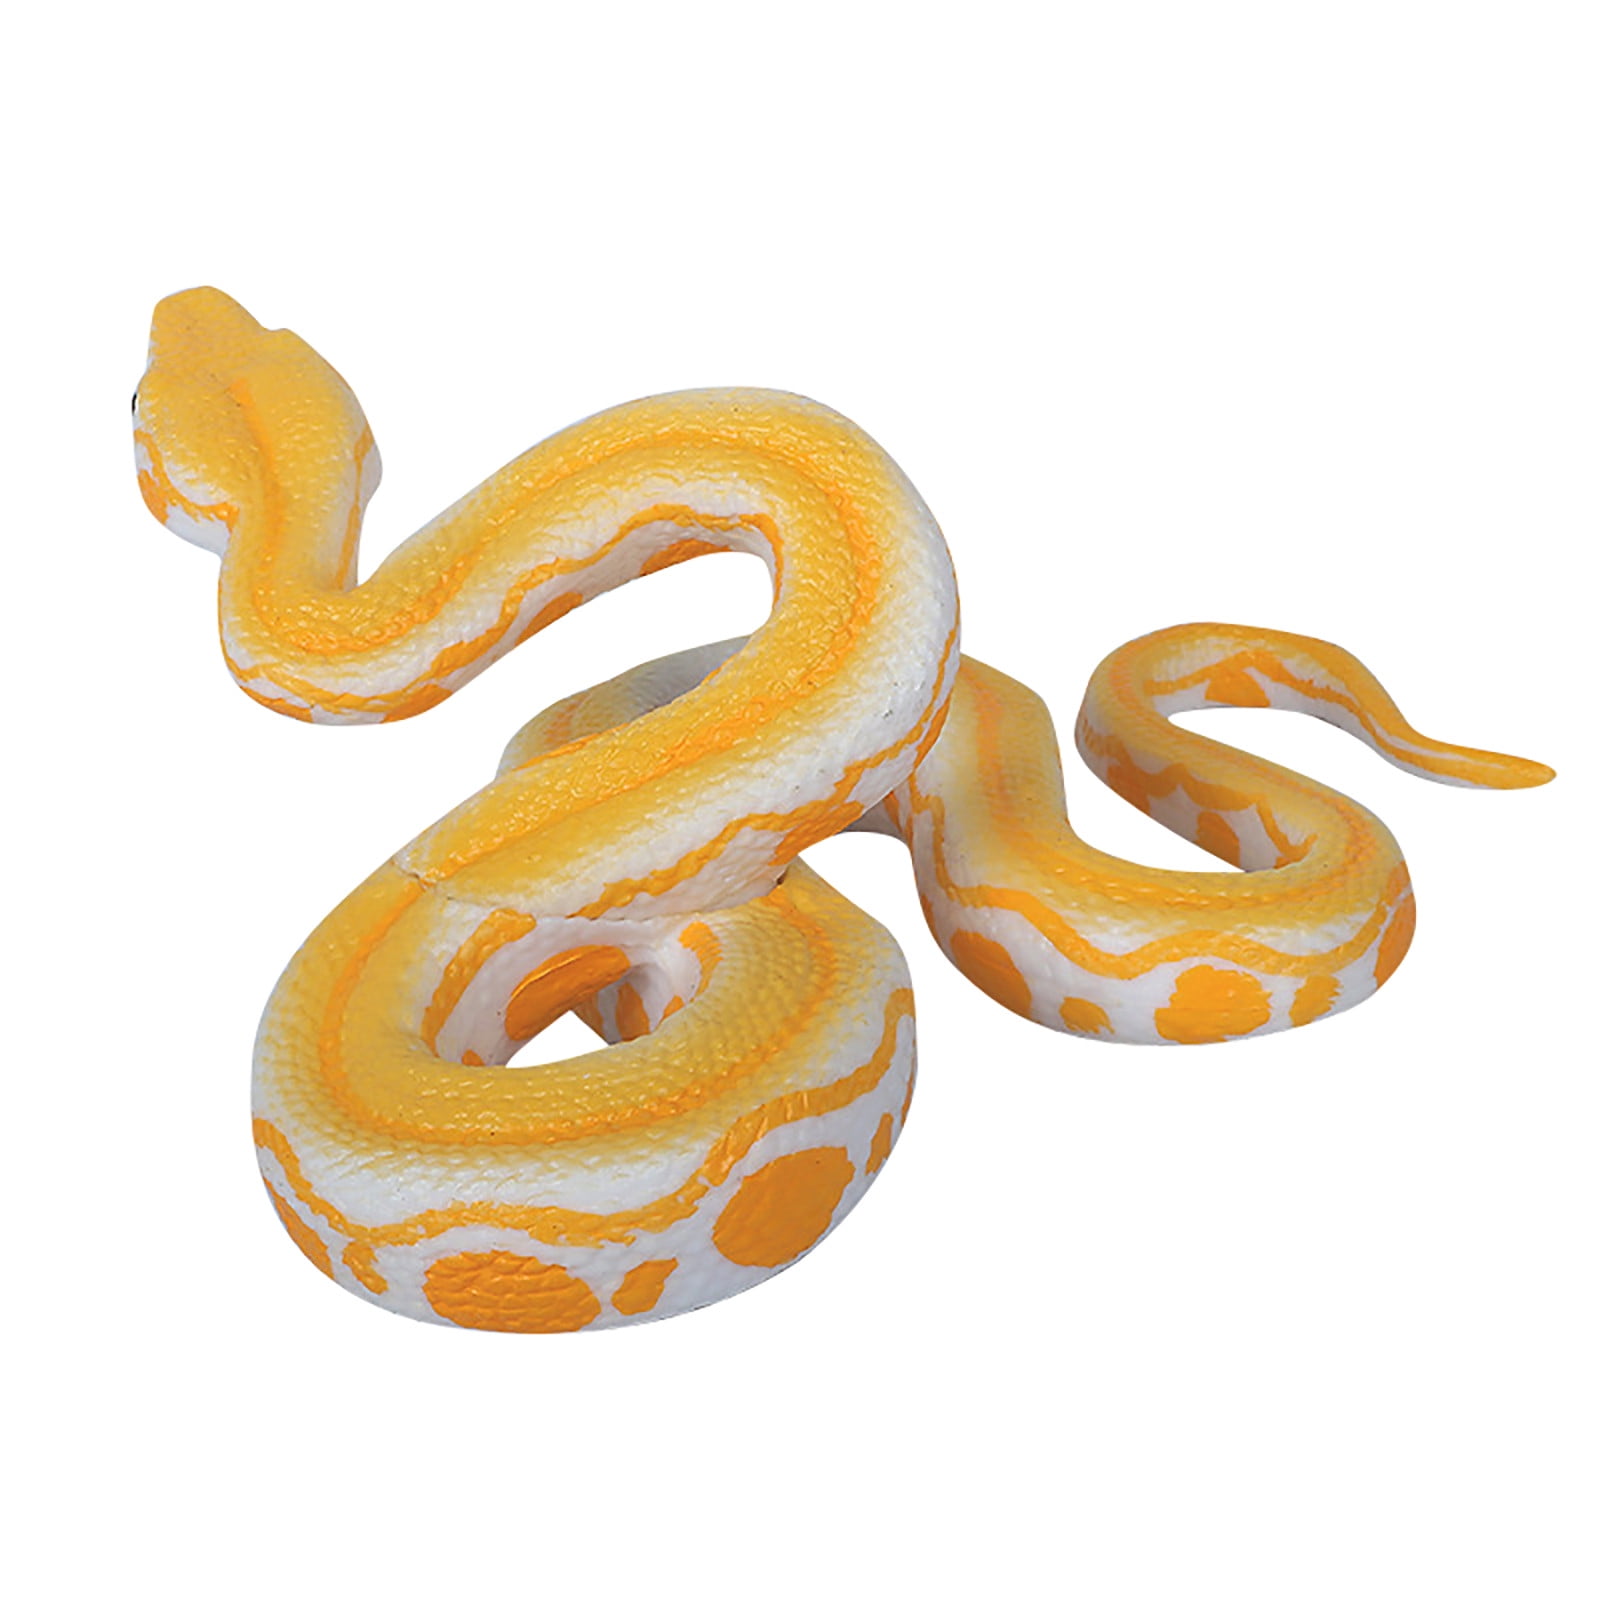 117cm Ball Python Rubber Snake Wild Republic 